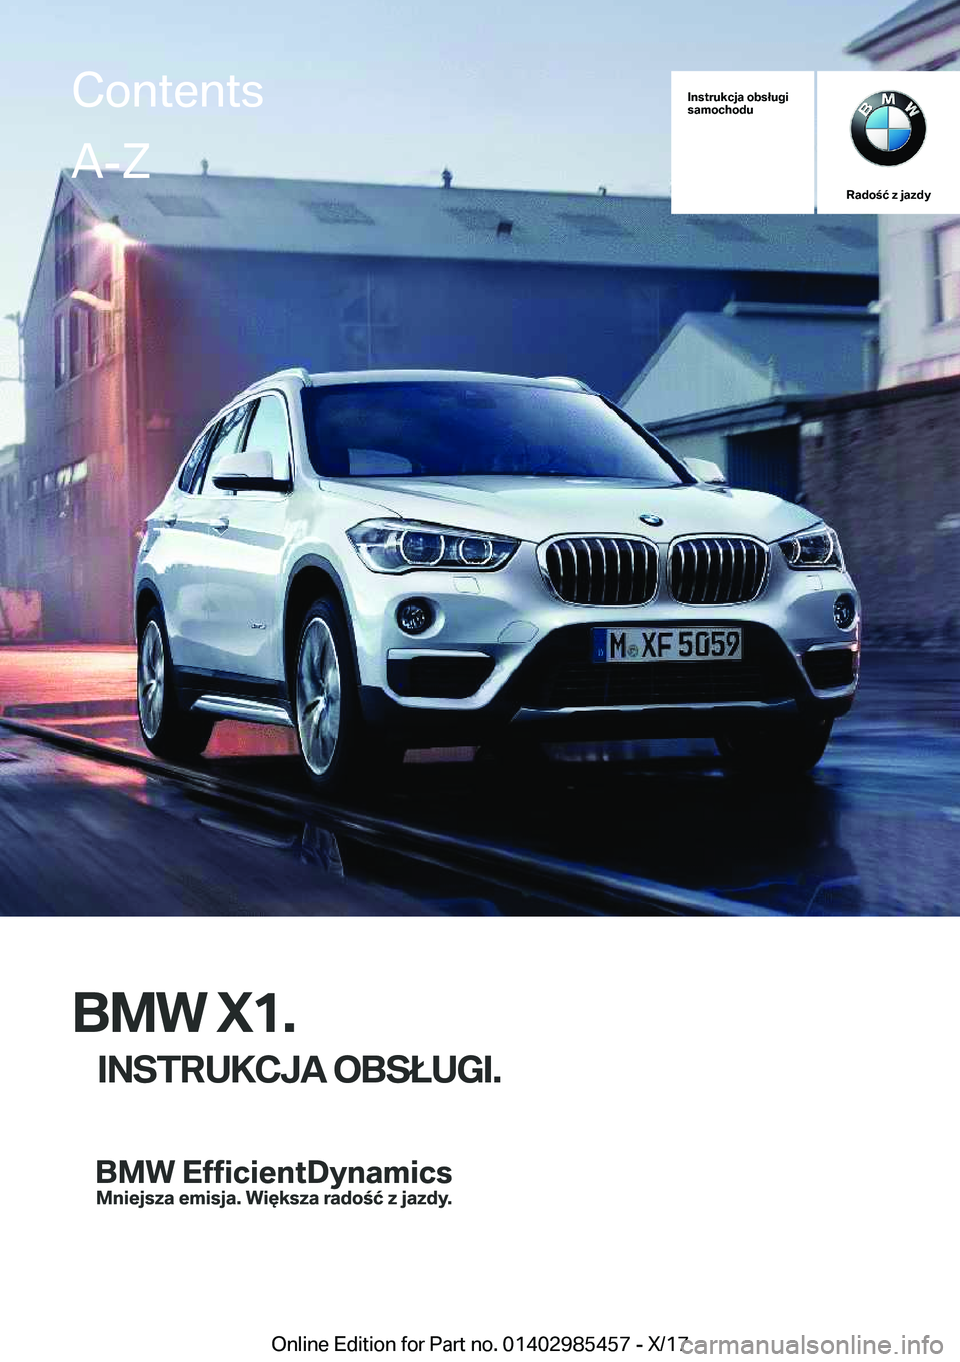 BMW X1 2018  Instrukcja obsługi (in Polish) �I�n�s�t�r�u�k�c�j�a��o�b�s�ł�u�g�i
�s�a�m�o�c�h�o�d�u
�R�a�d�o�